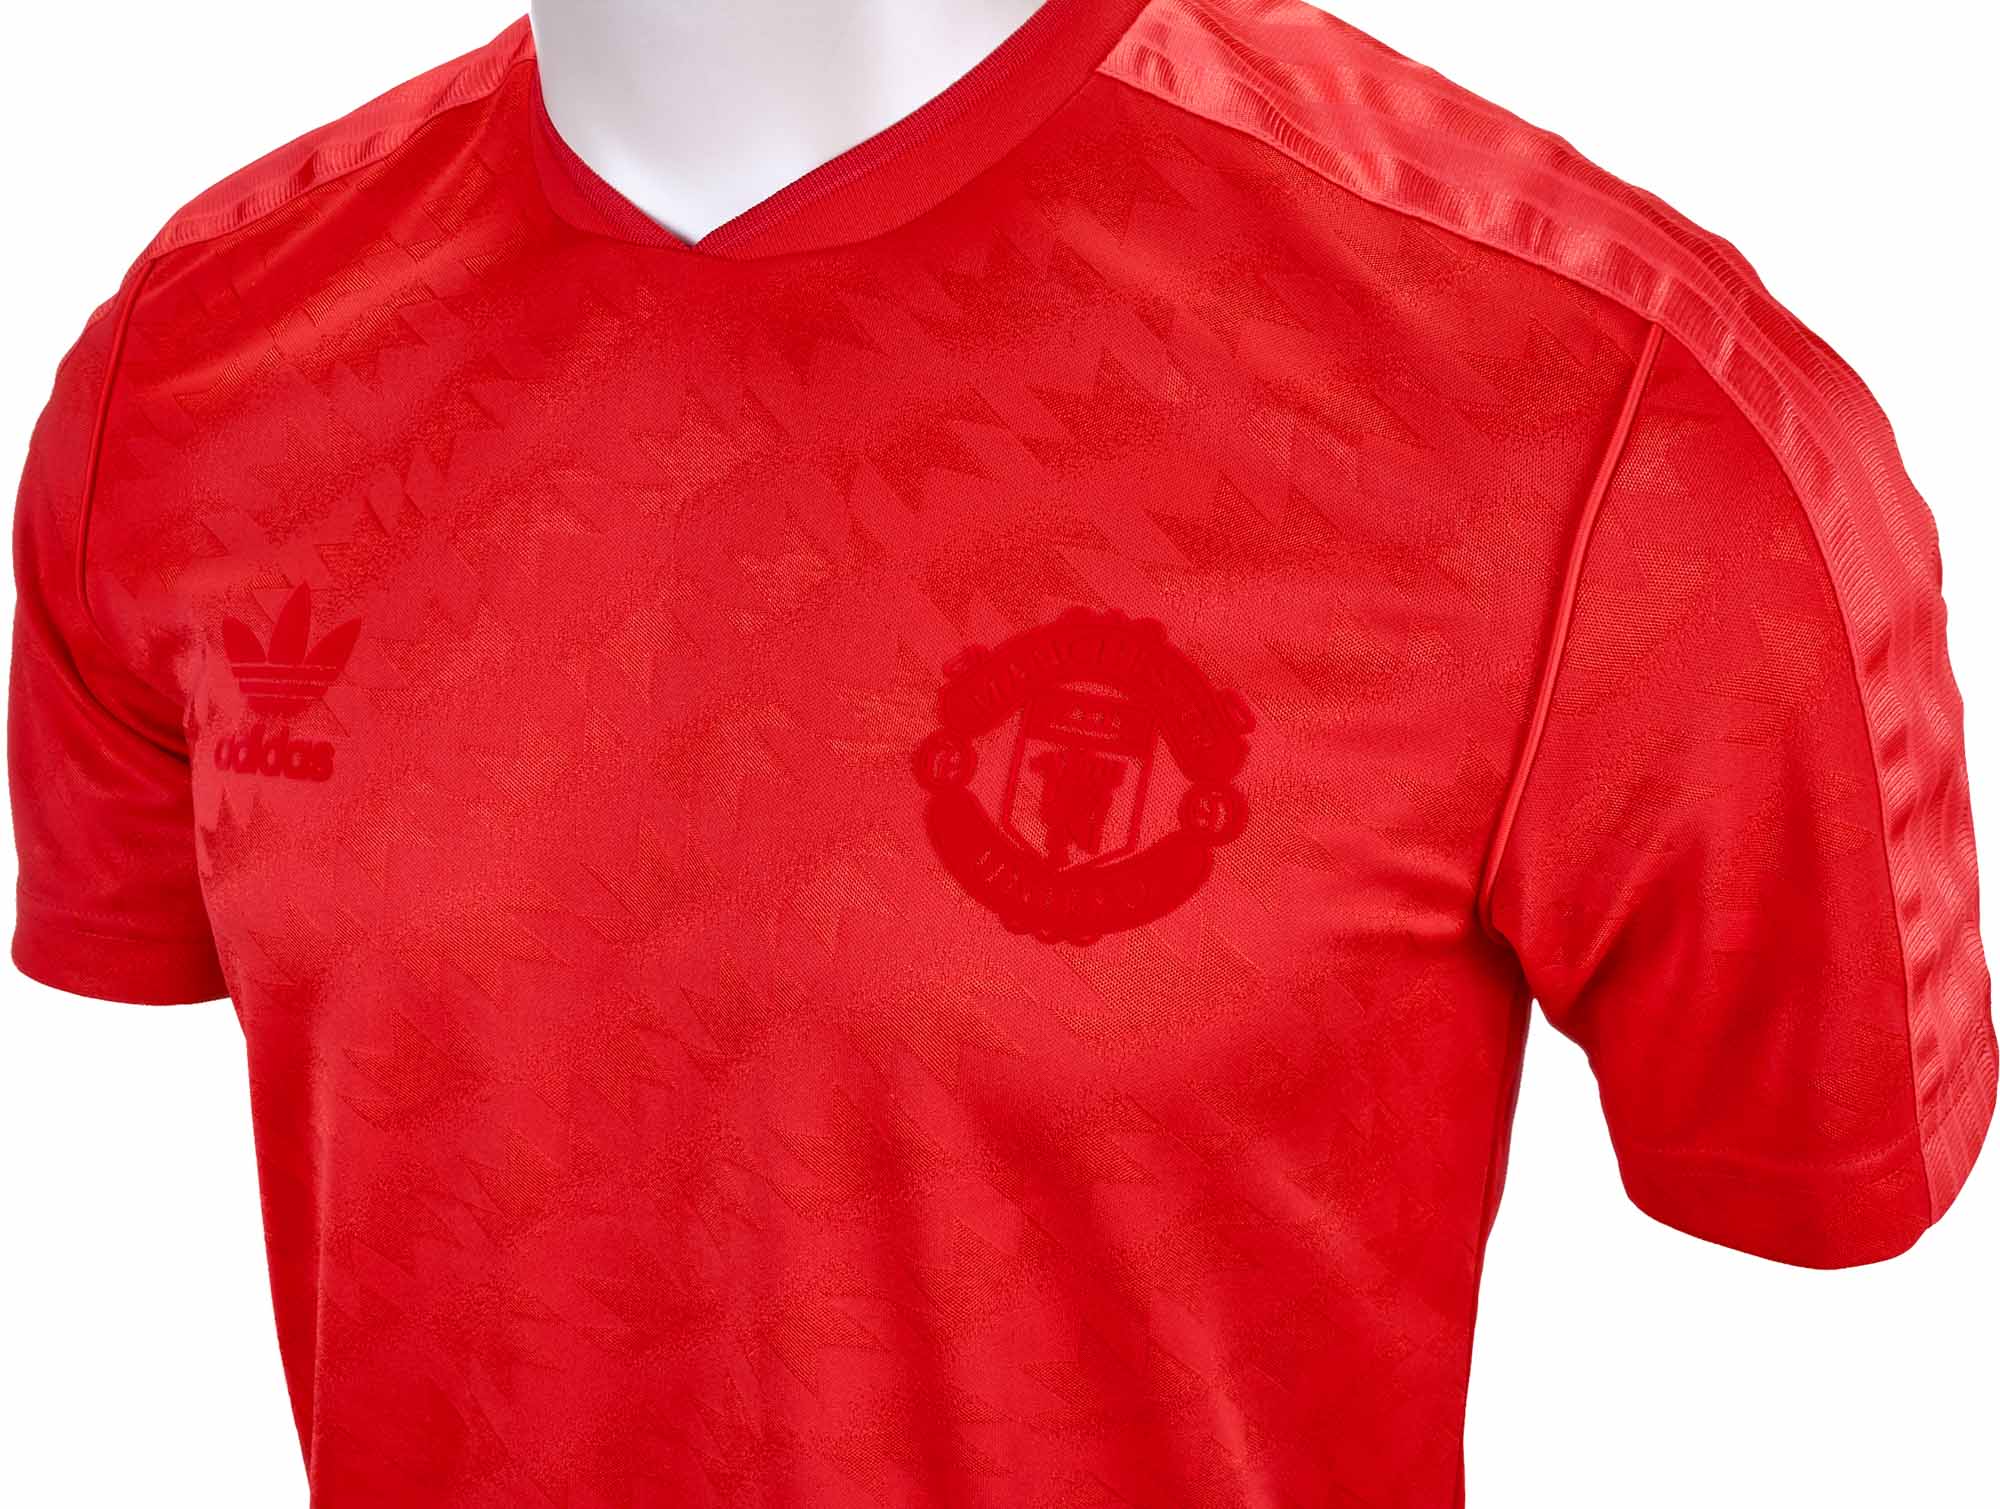 adidas originals manchester united jersey